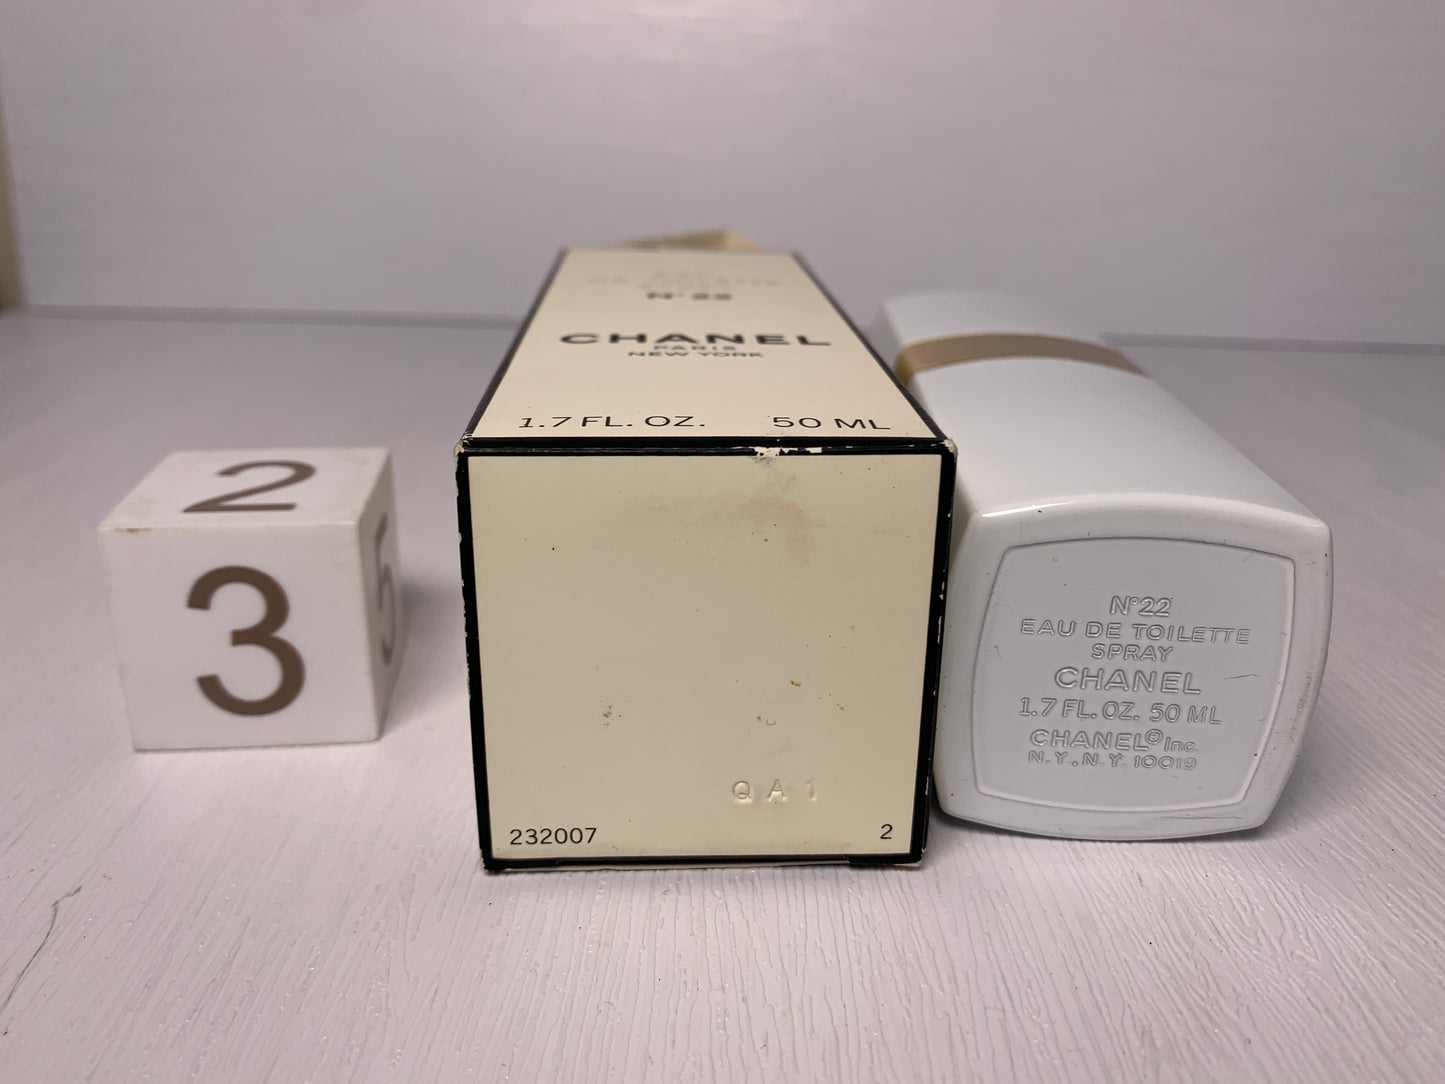 Rare Chanel No. 22 50ml 1.7 oz Cologne Eau de Toilette - 6FEB22